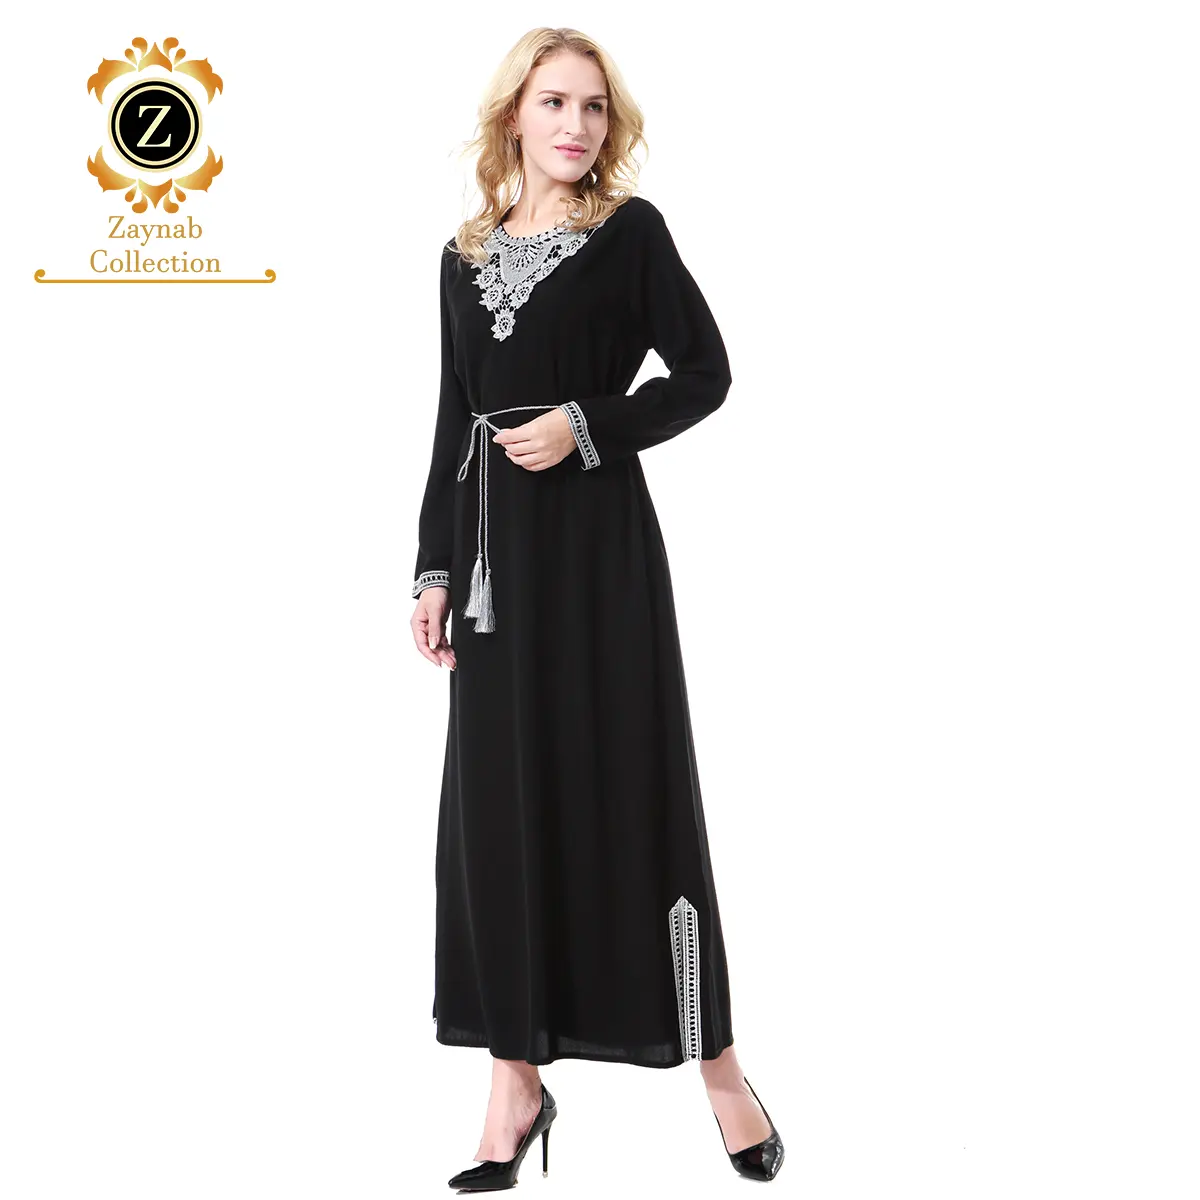 Zaynab Abaya Nida Abaya pamuk türkiye tasarımlar Kaftan islam giyim Dubai toptan Abaya